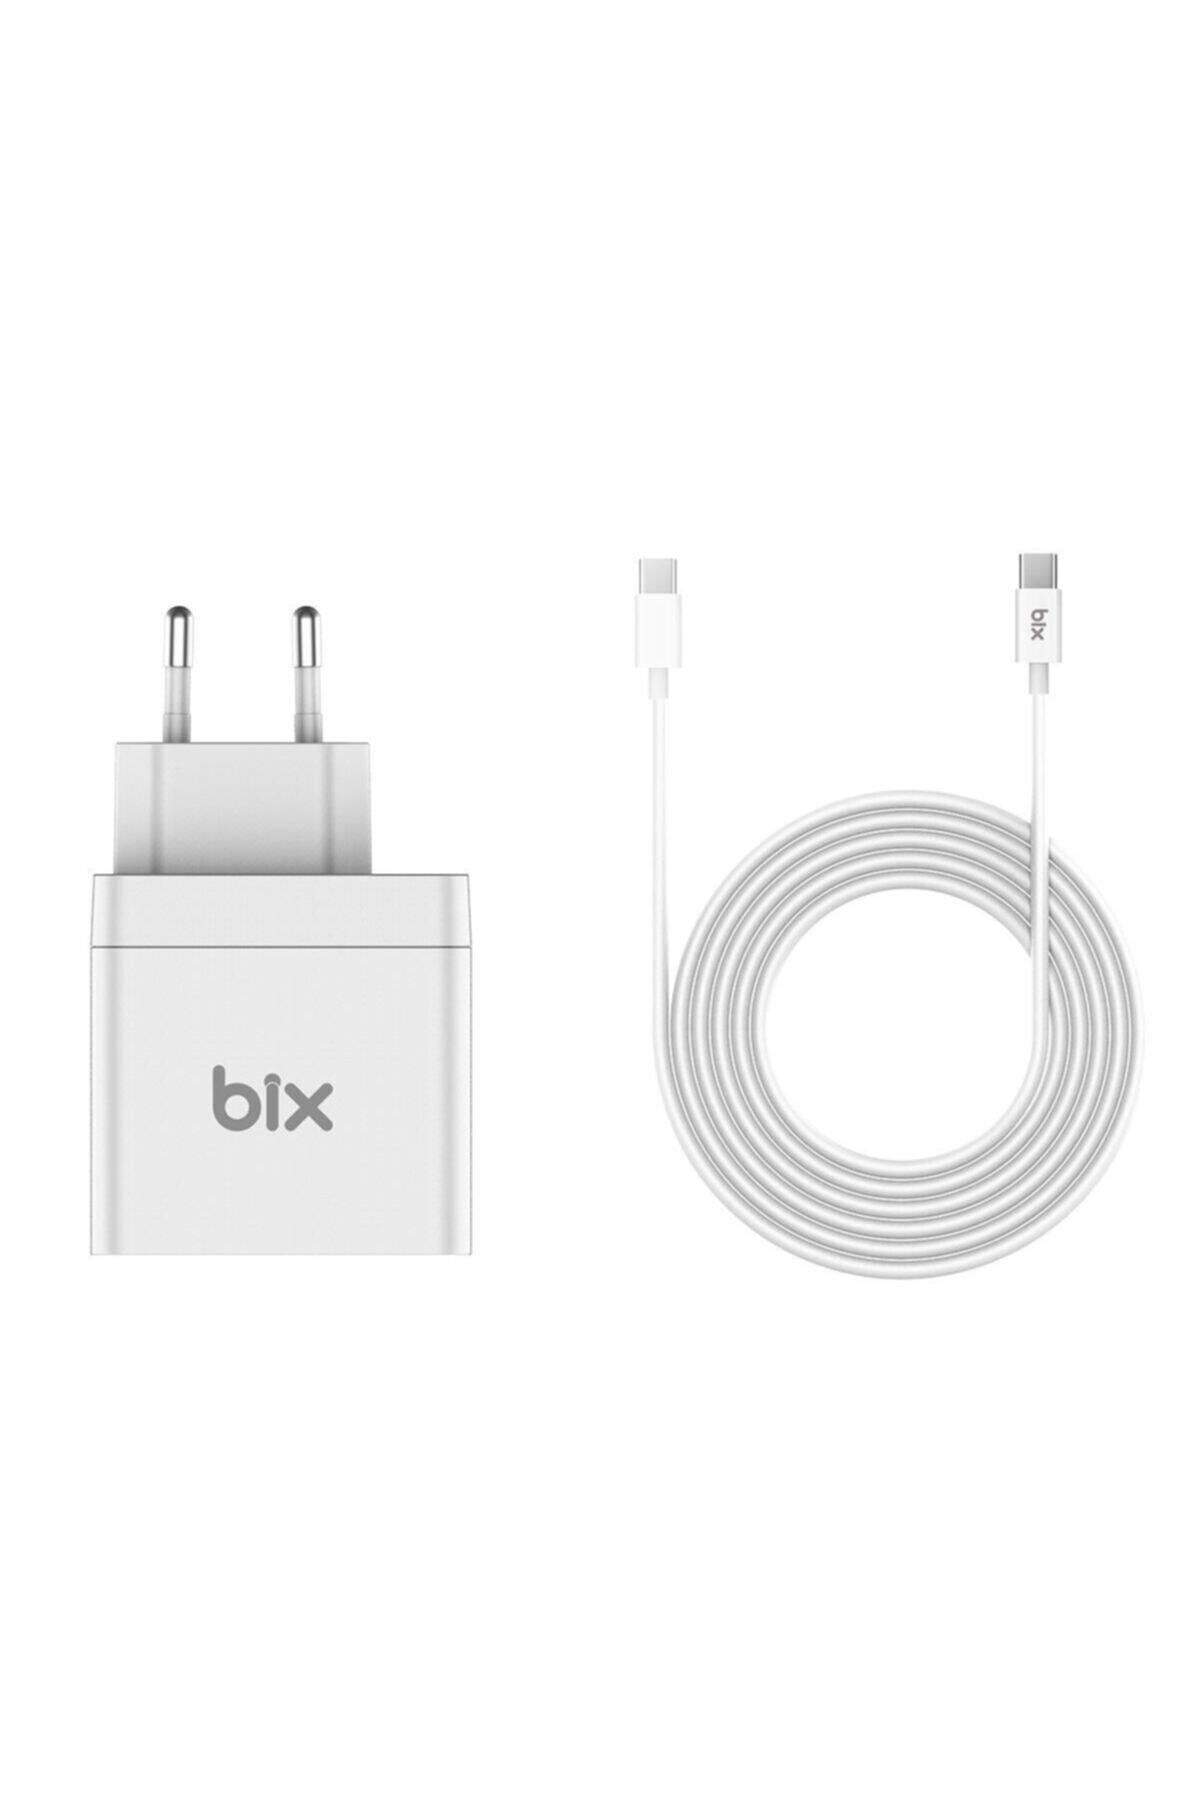 Bix Bx-uc65wfta 65w Pd Hızlı Şarj Adaptörü Ve E-mark Çipli 2 Metre Usb-c Kablo